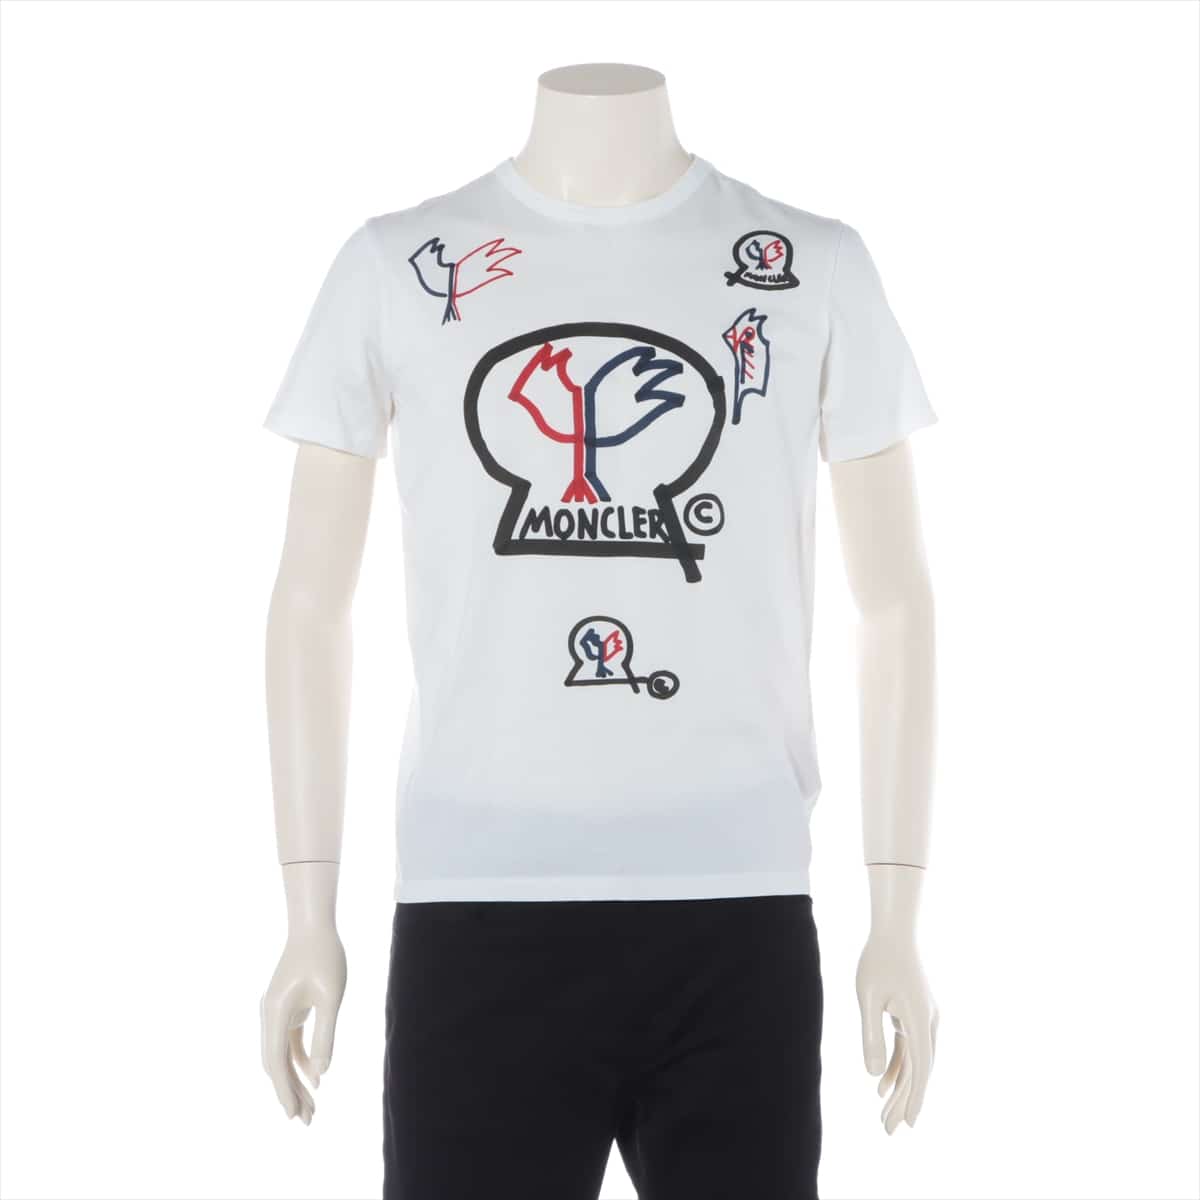 Moncler Genius 1952 18 years Cotton T-shirt S Men's White